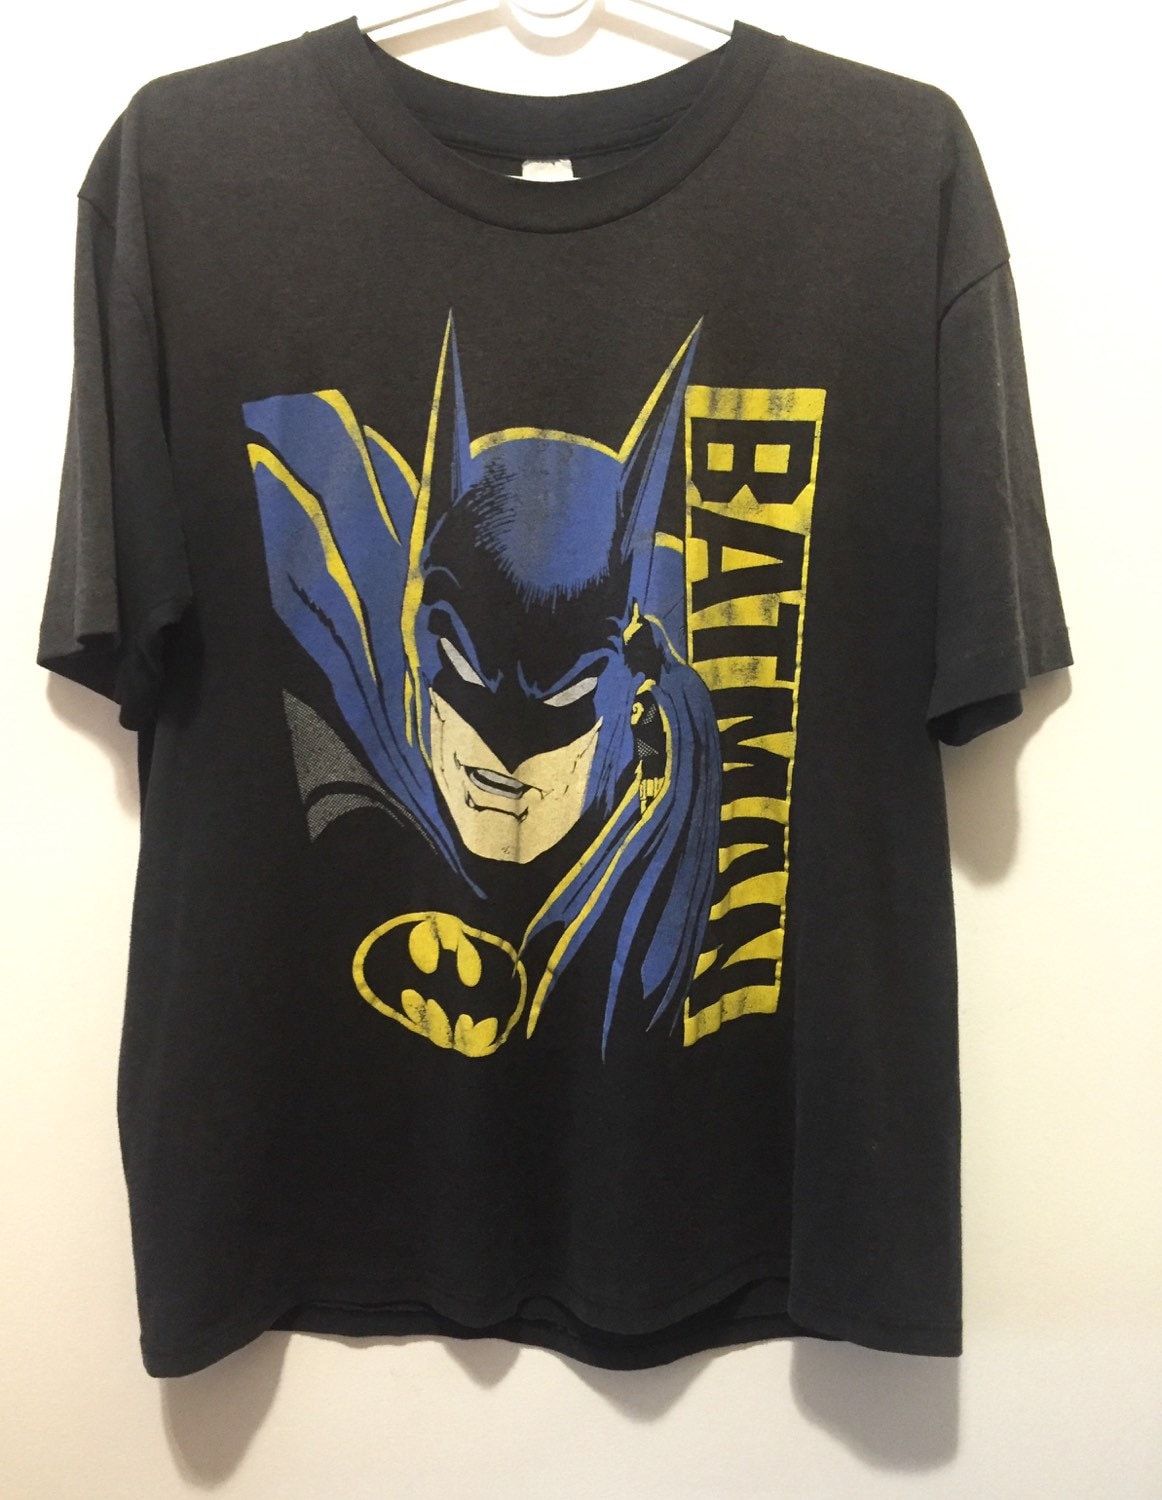 Vintage 1980's Batman T-Shirt // Worn to perfection.